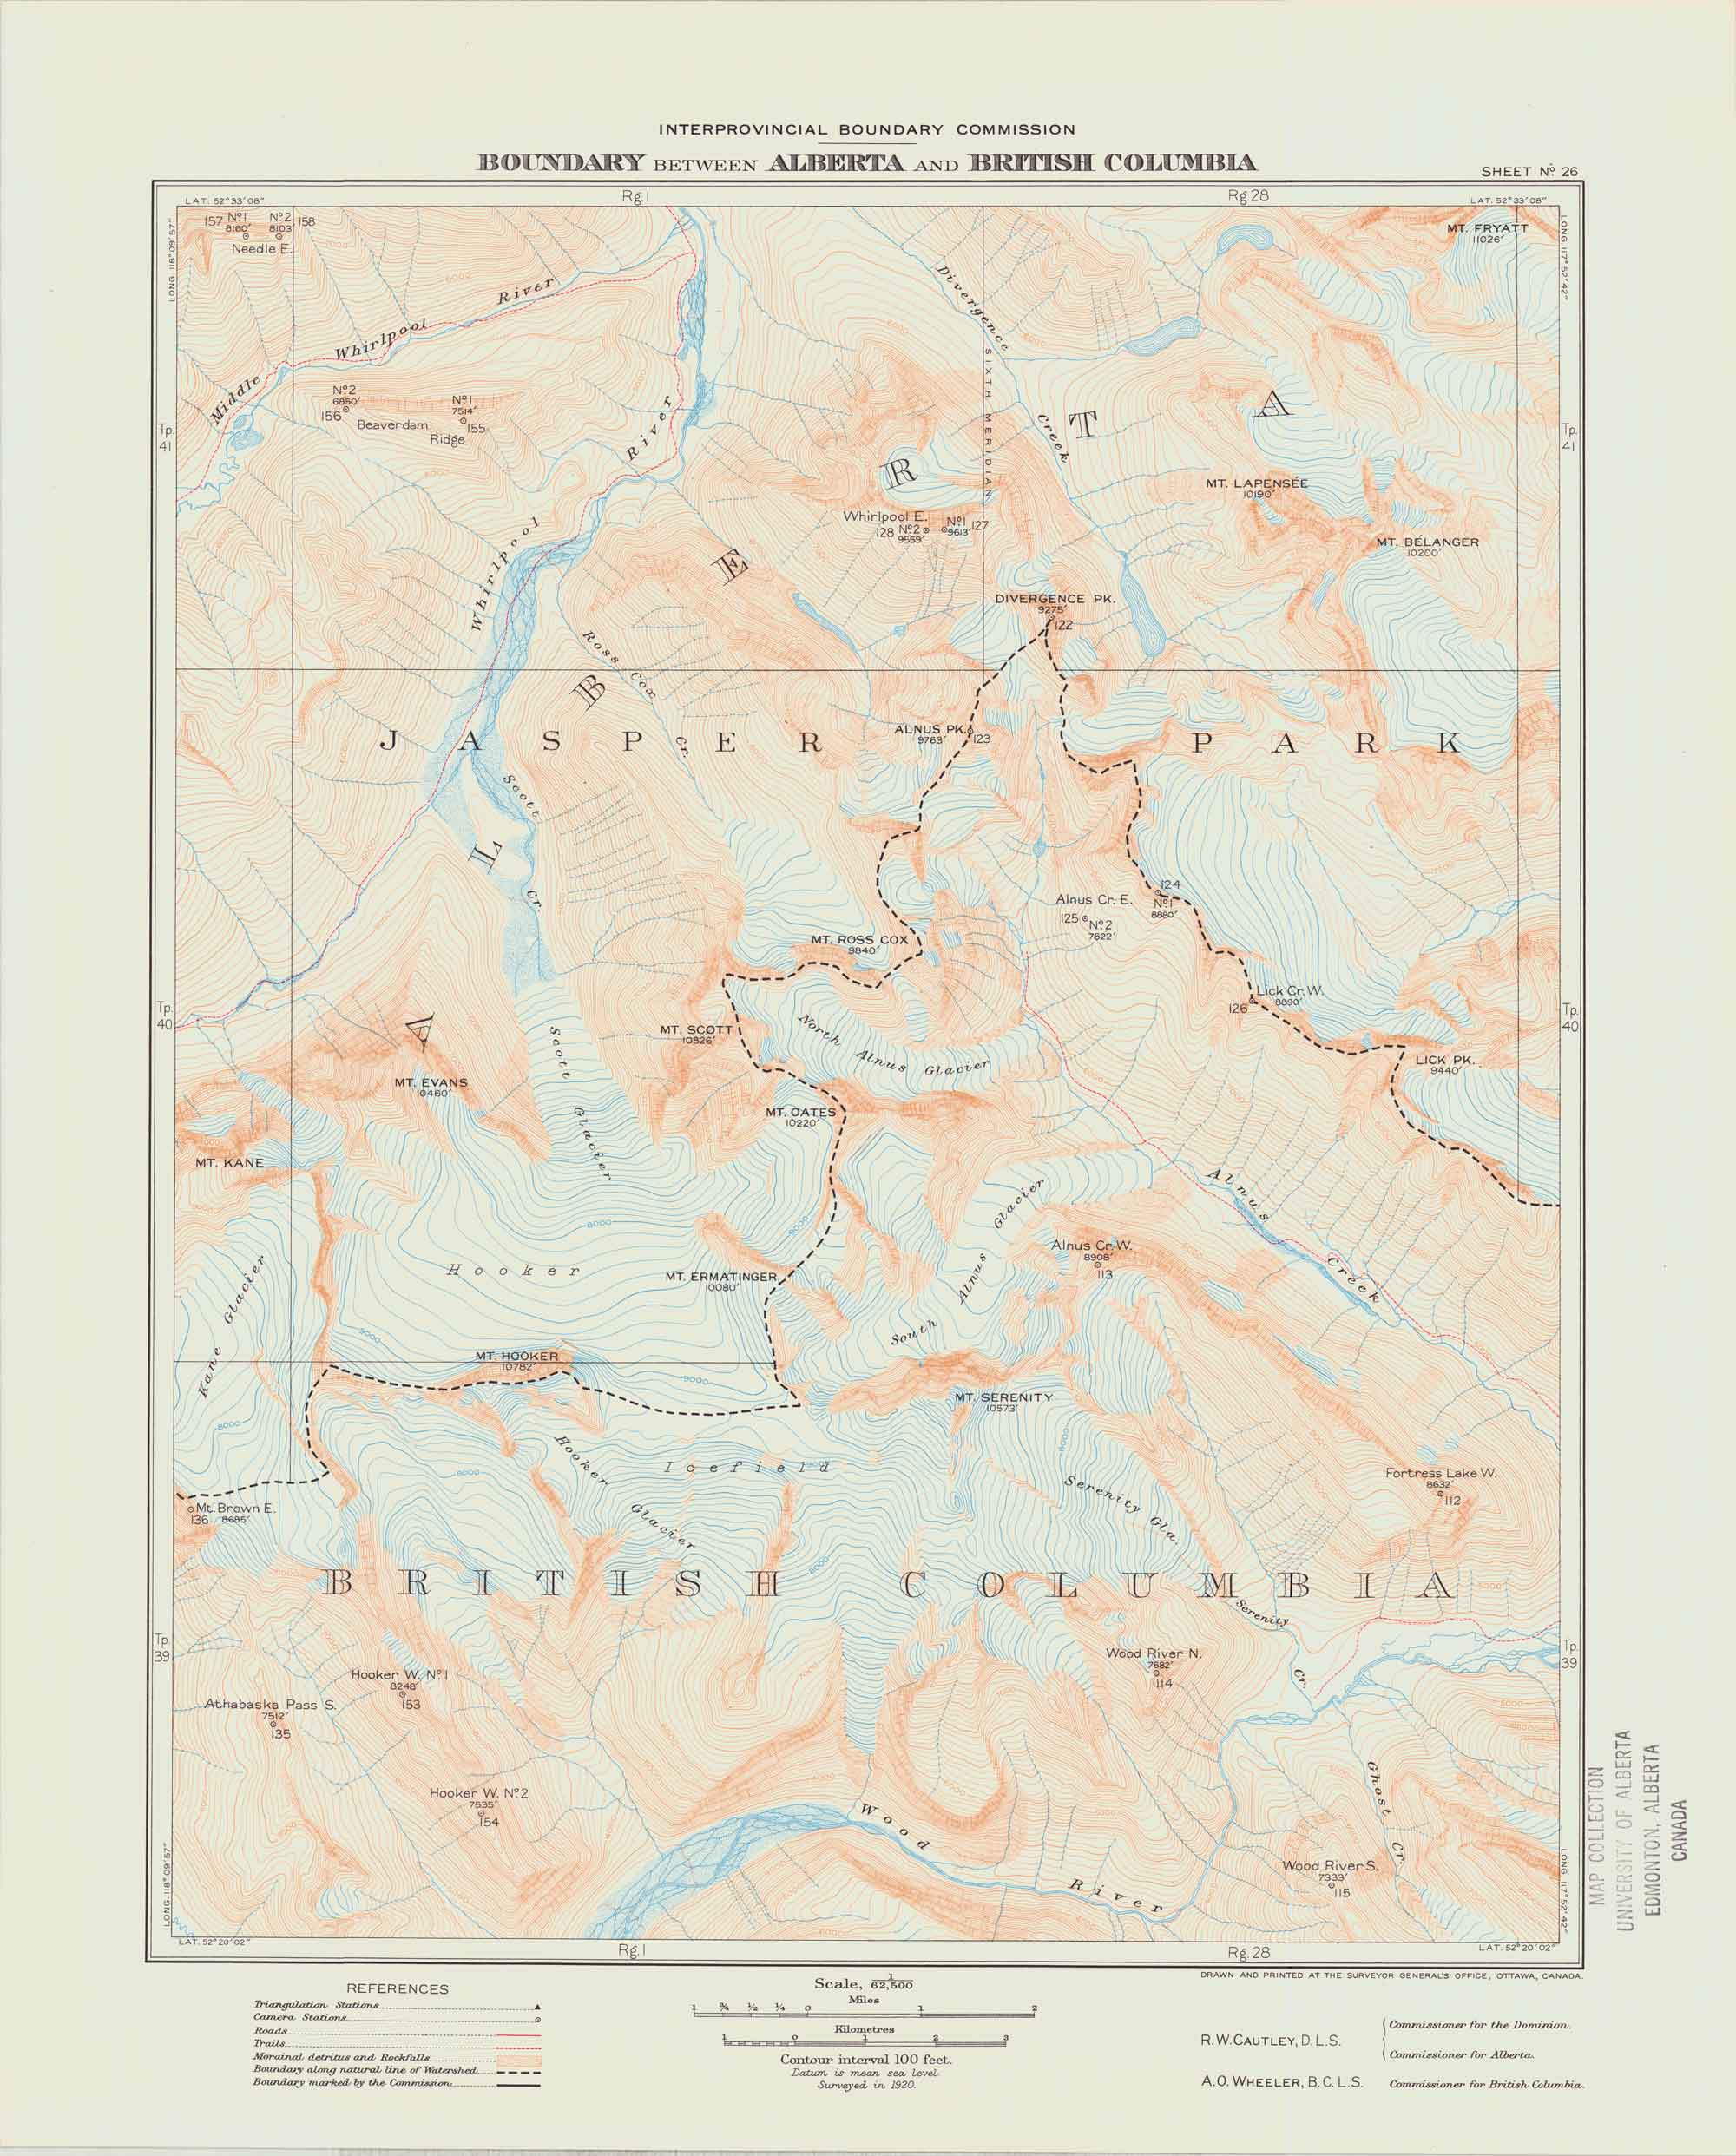 Boundary between Alberta and British Columbia. 
Office of the Surveyor-General, 1924